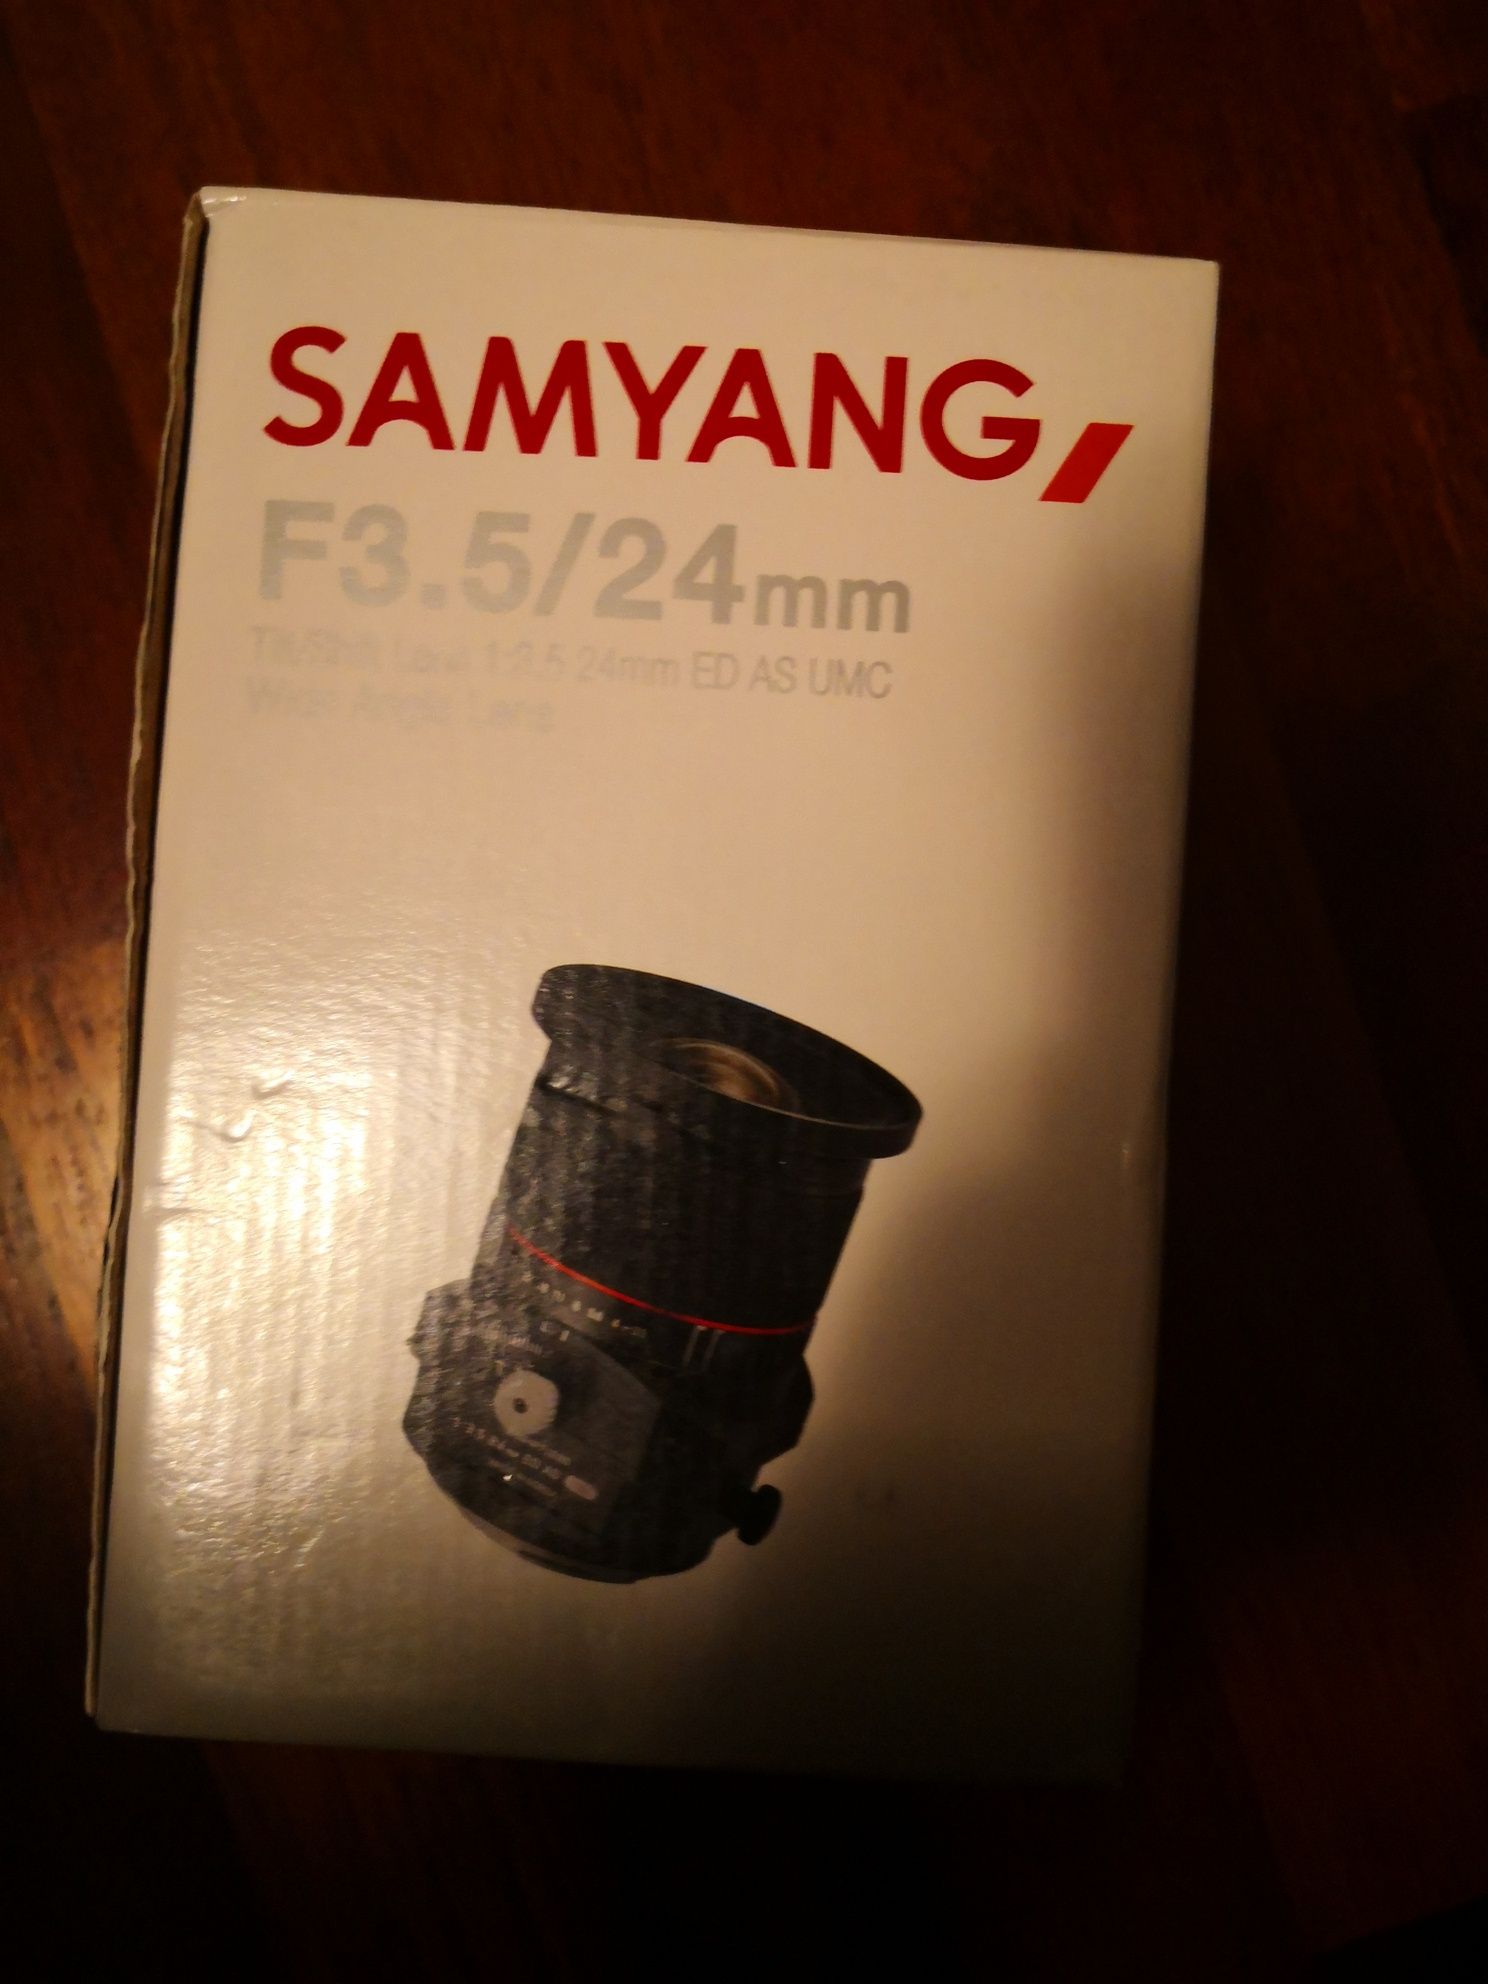 Samyang T-S 24 mm F/3.5 ed as Umc Tily/Shift Fuji X